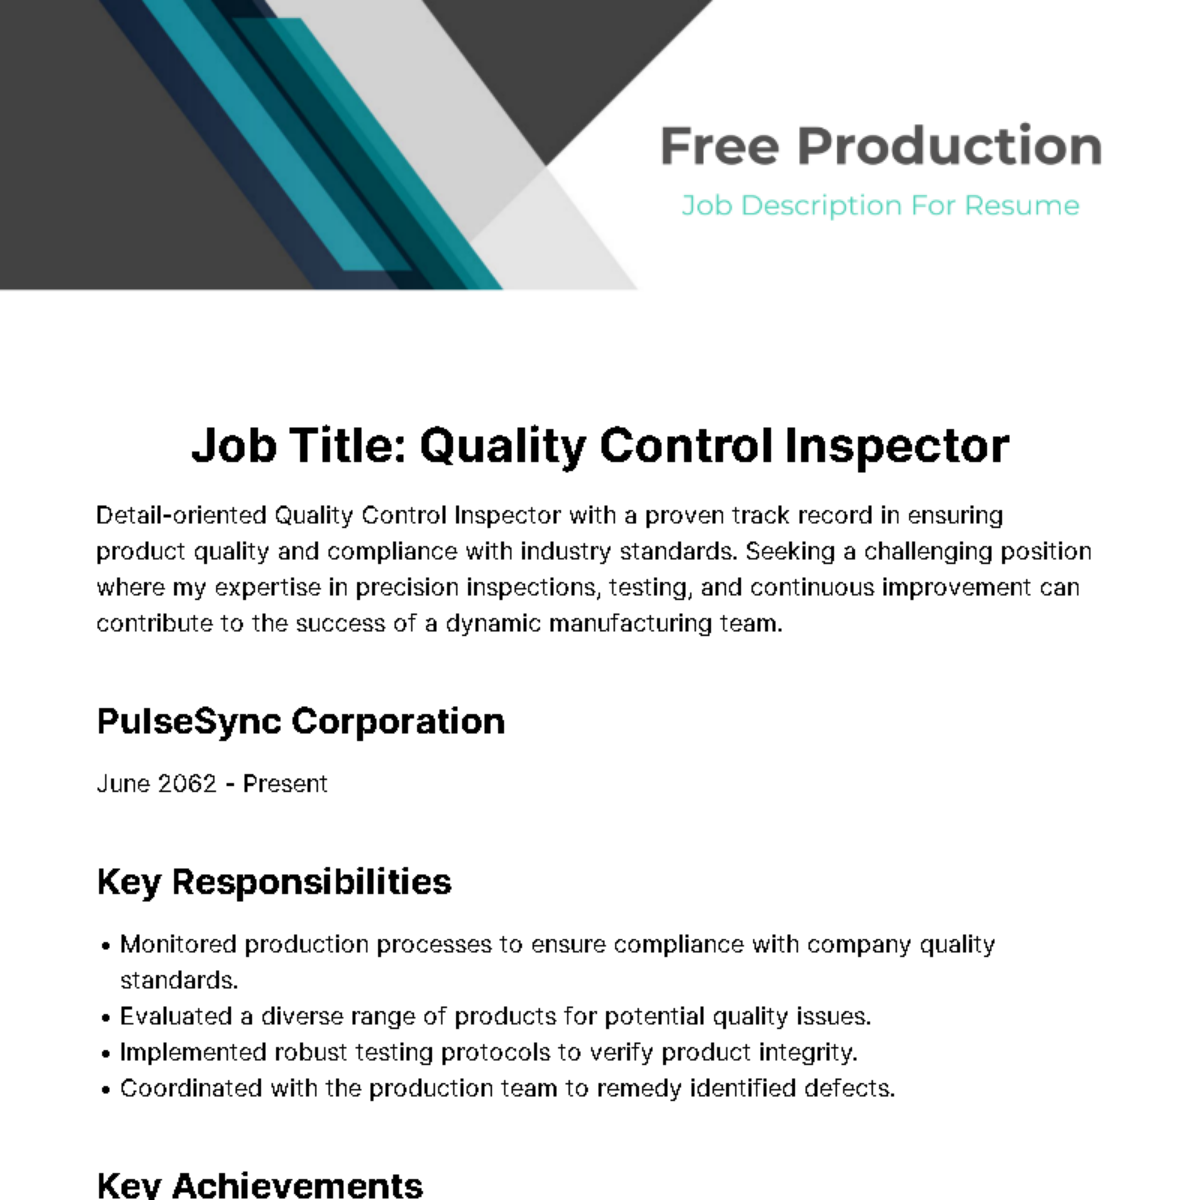 Free Production Job Description For Resume Template